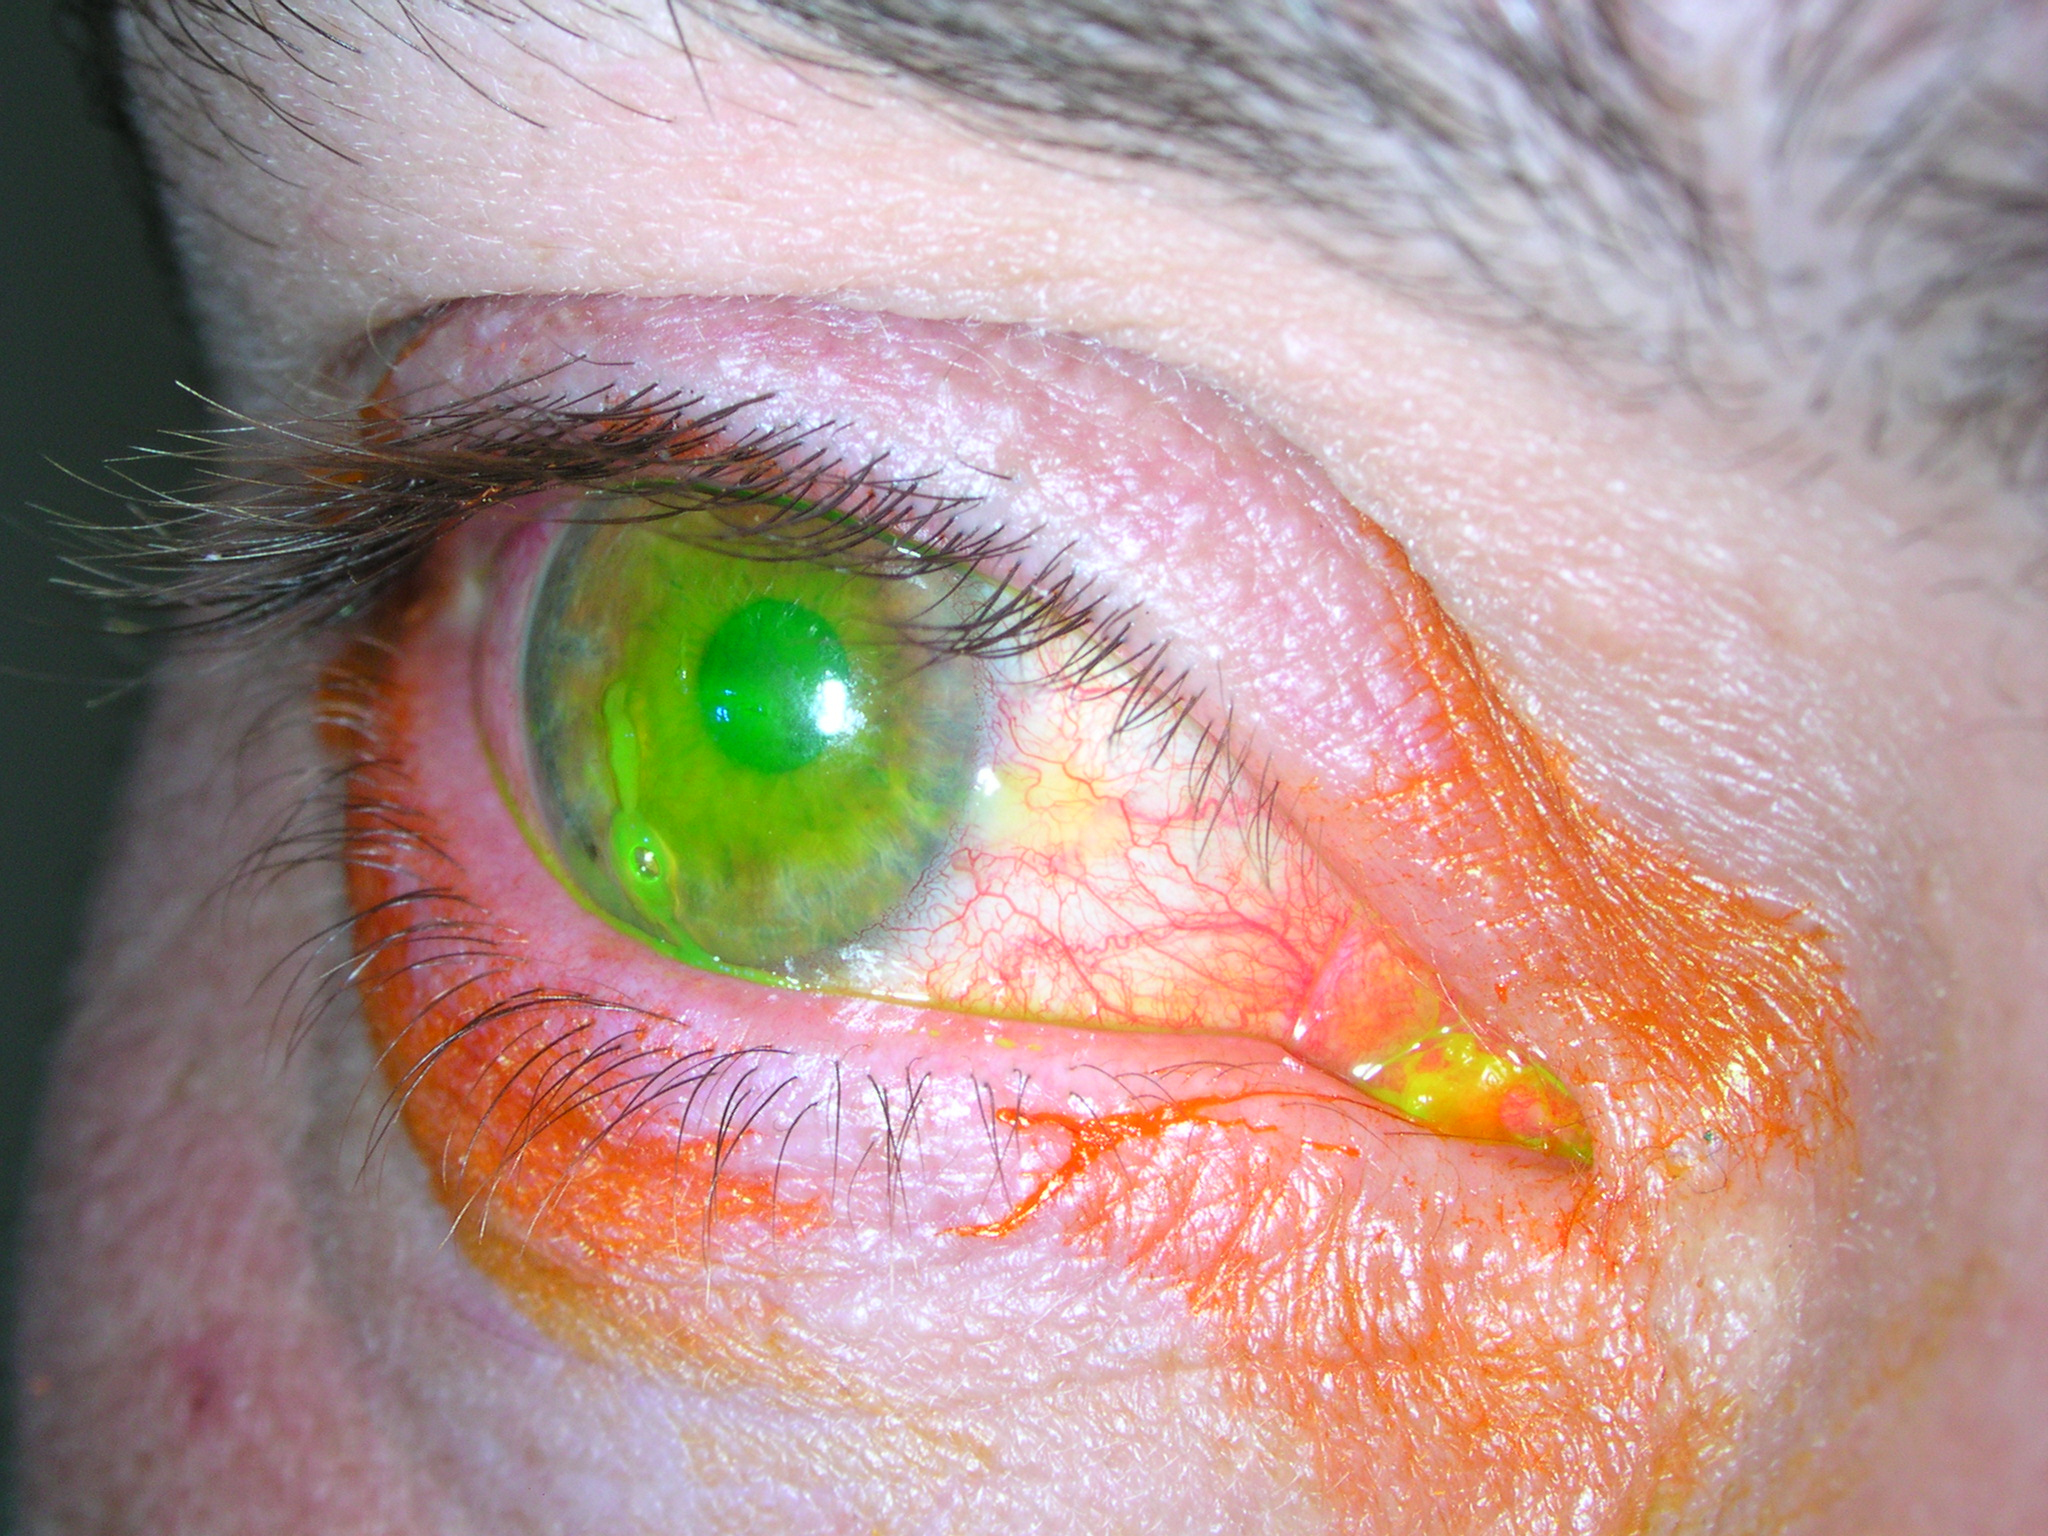 Managing Chemical Burns in the Eye